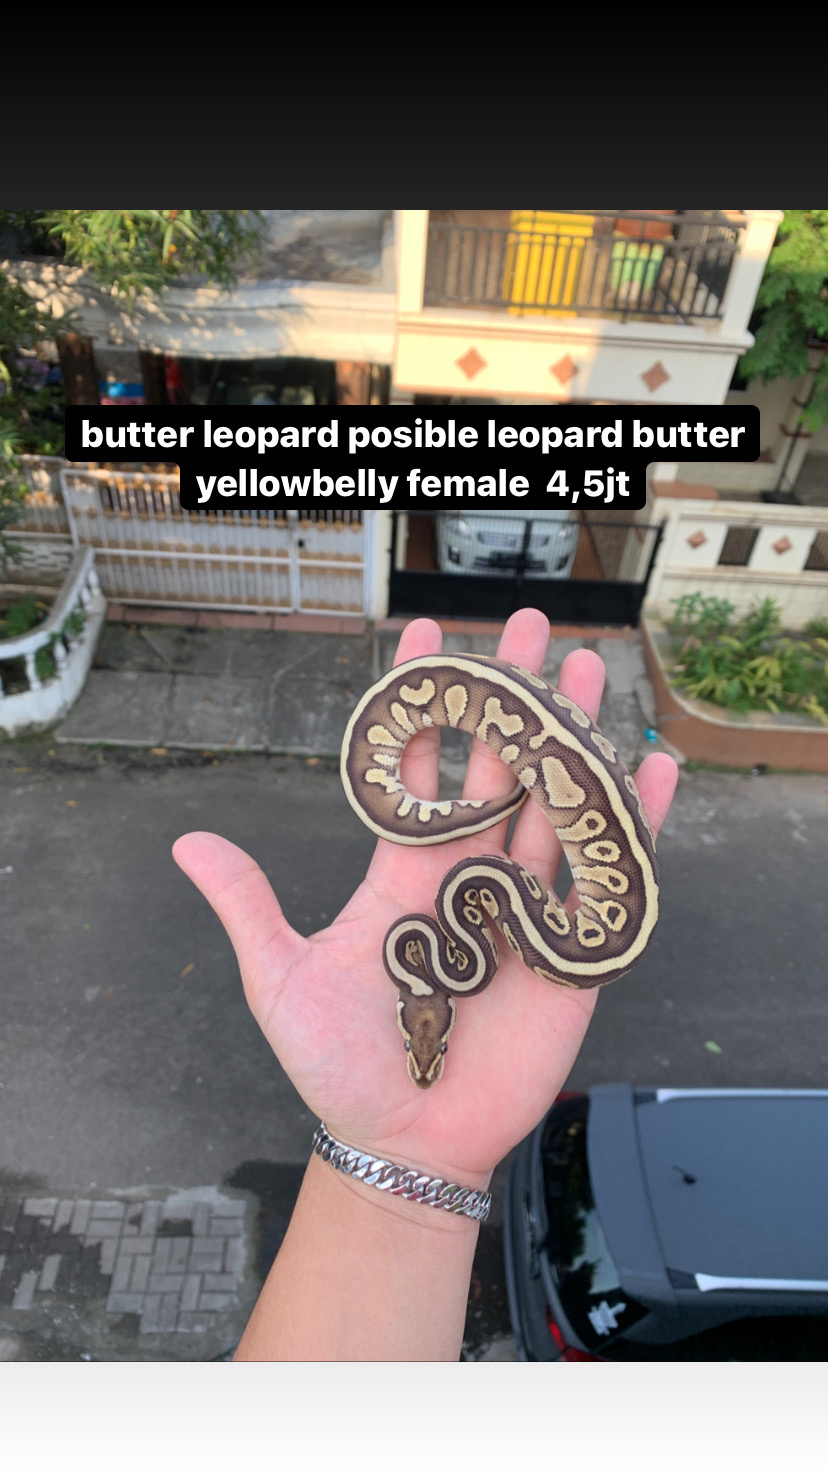 leopard butter pos yb female ballpython